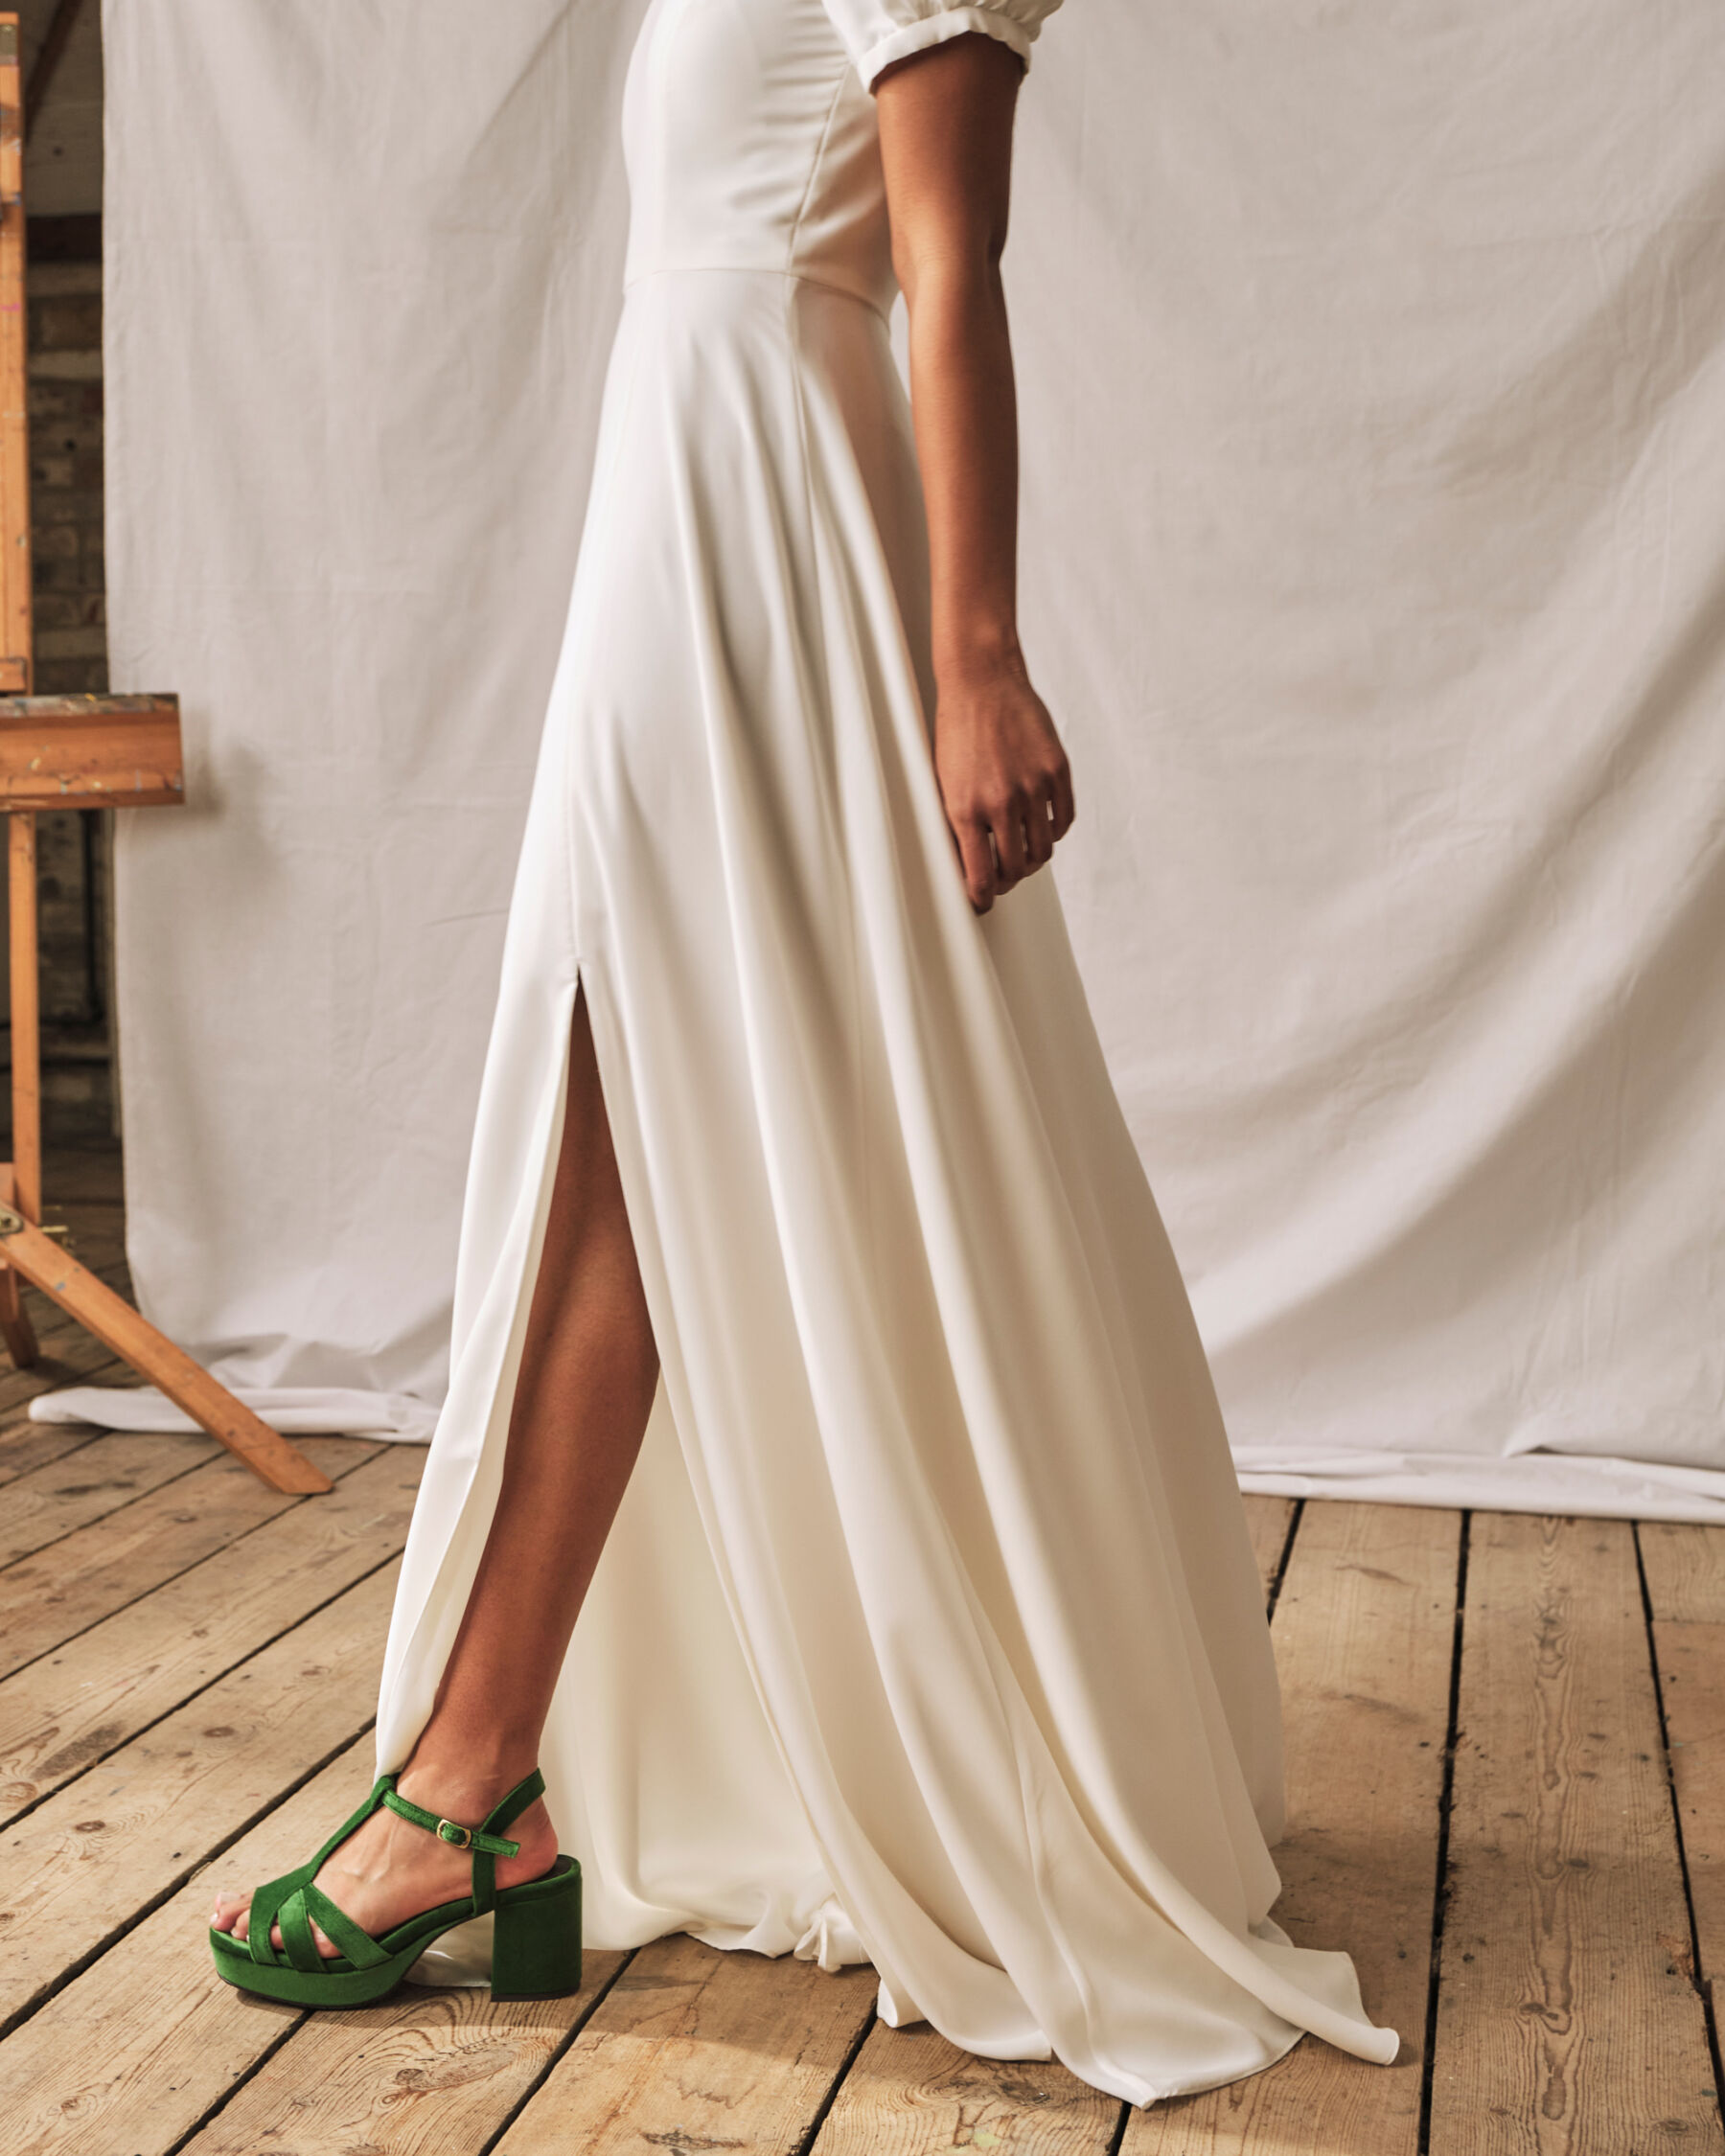 Simple wedding dress with knee split, worn with green block heel shoes by Esska.